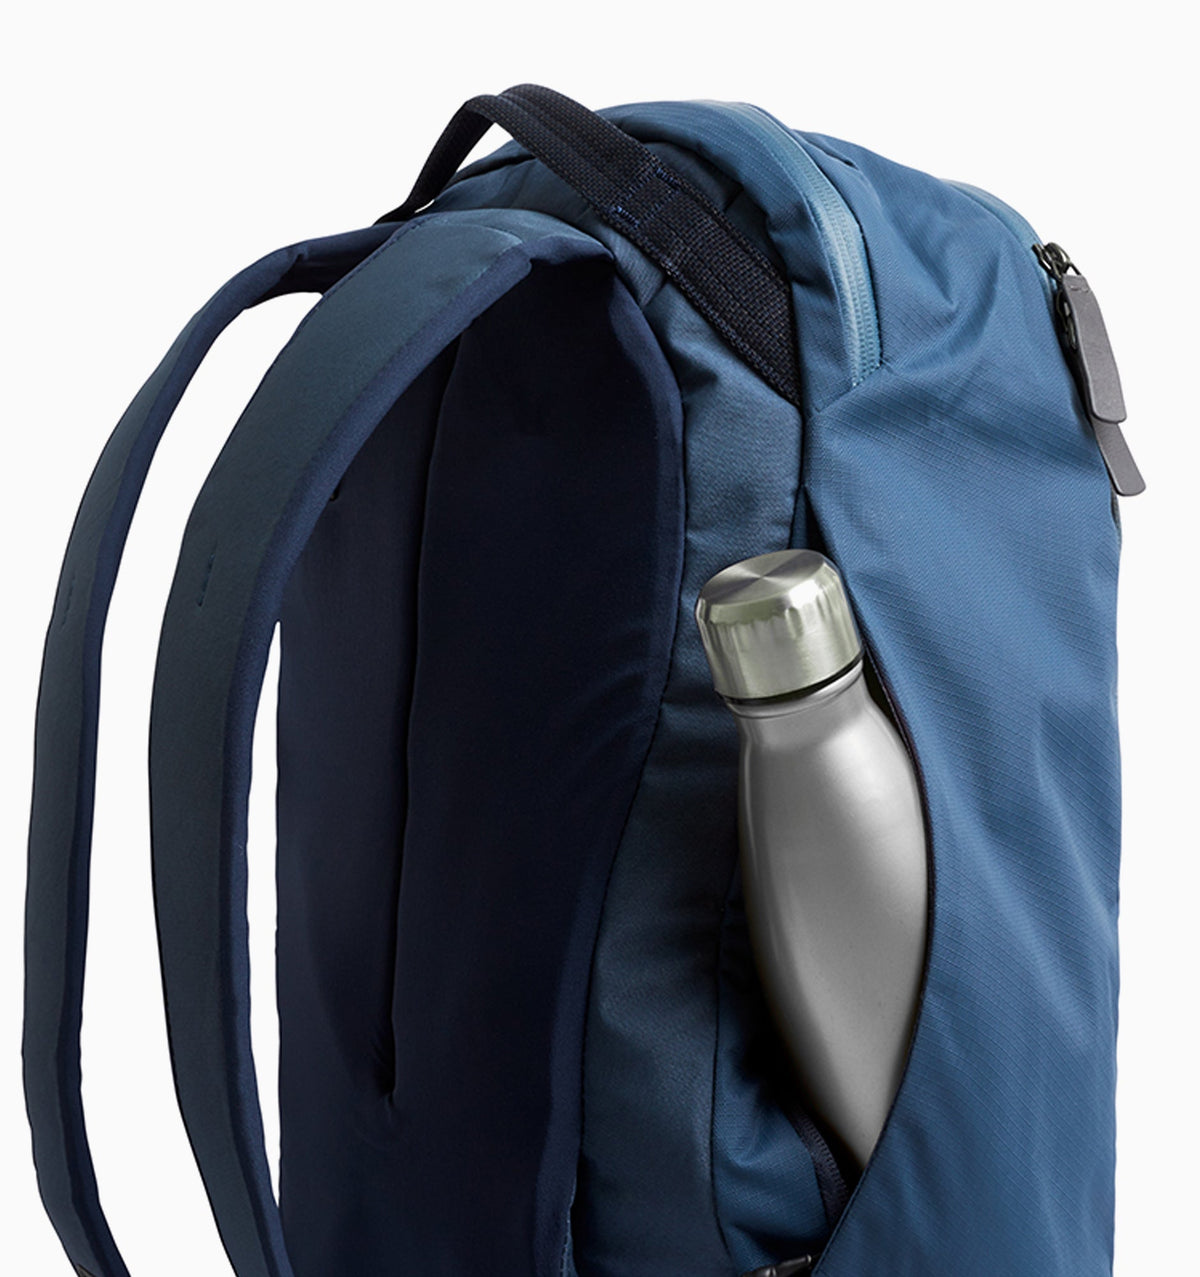 Bellroy Transit Workpack 16" Laptop Backpack - Marine Blue